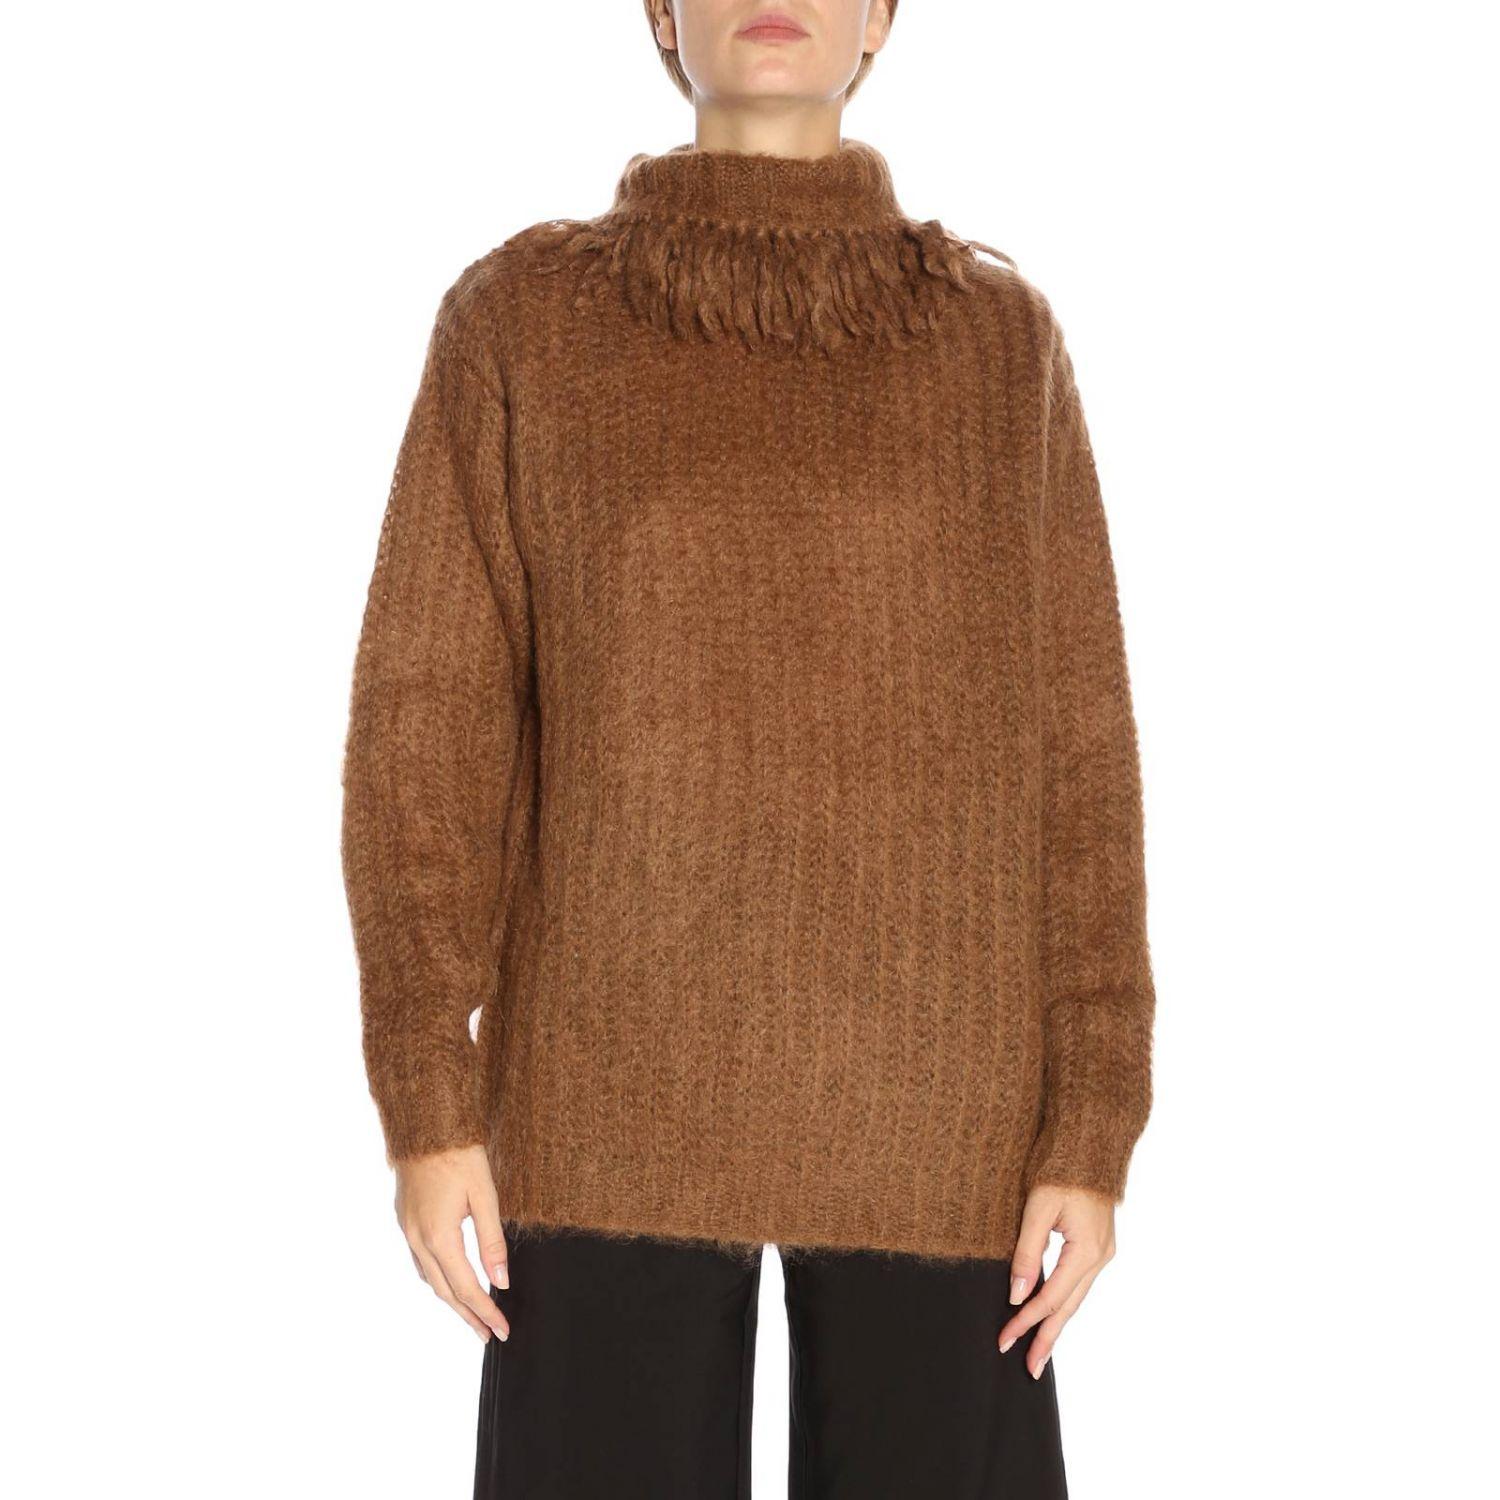 Miu Miu Synthetic Women's Sweater in Tobacco (Brown) - Save 55% - Lyst